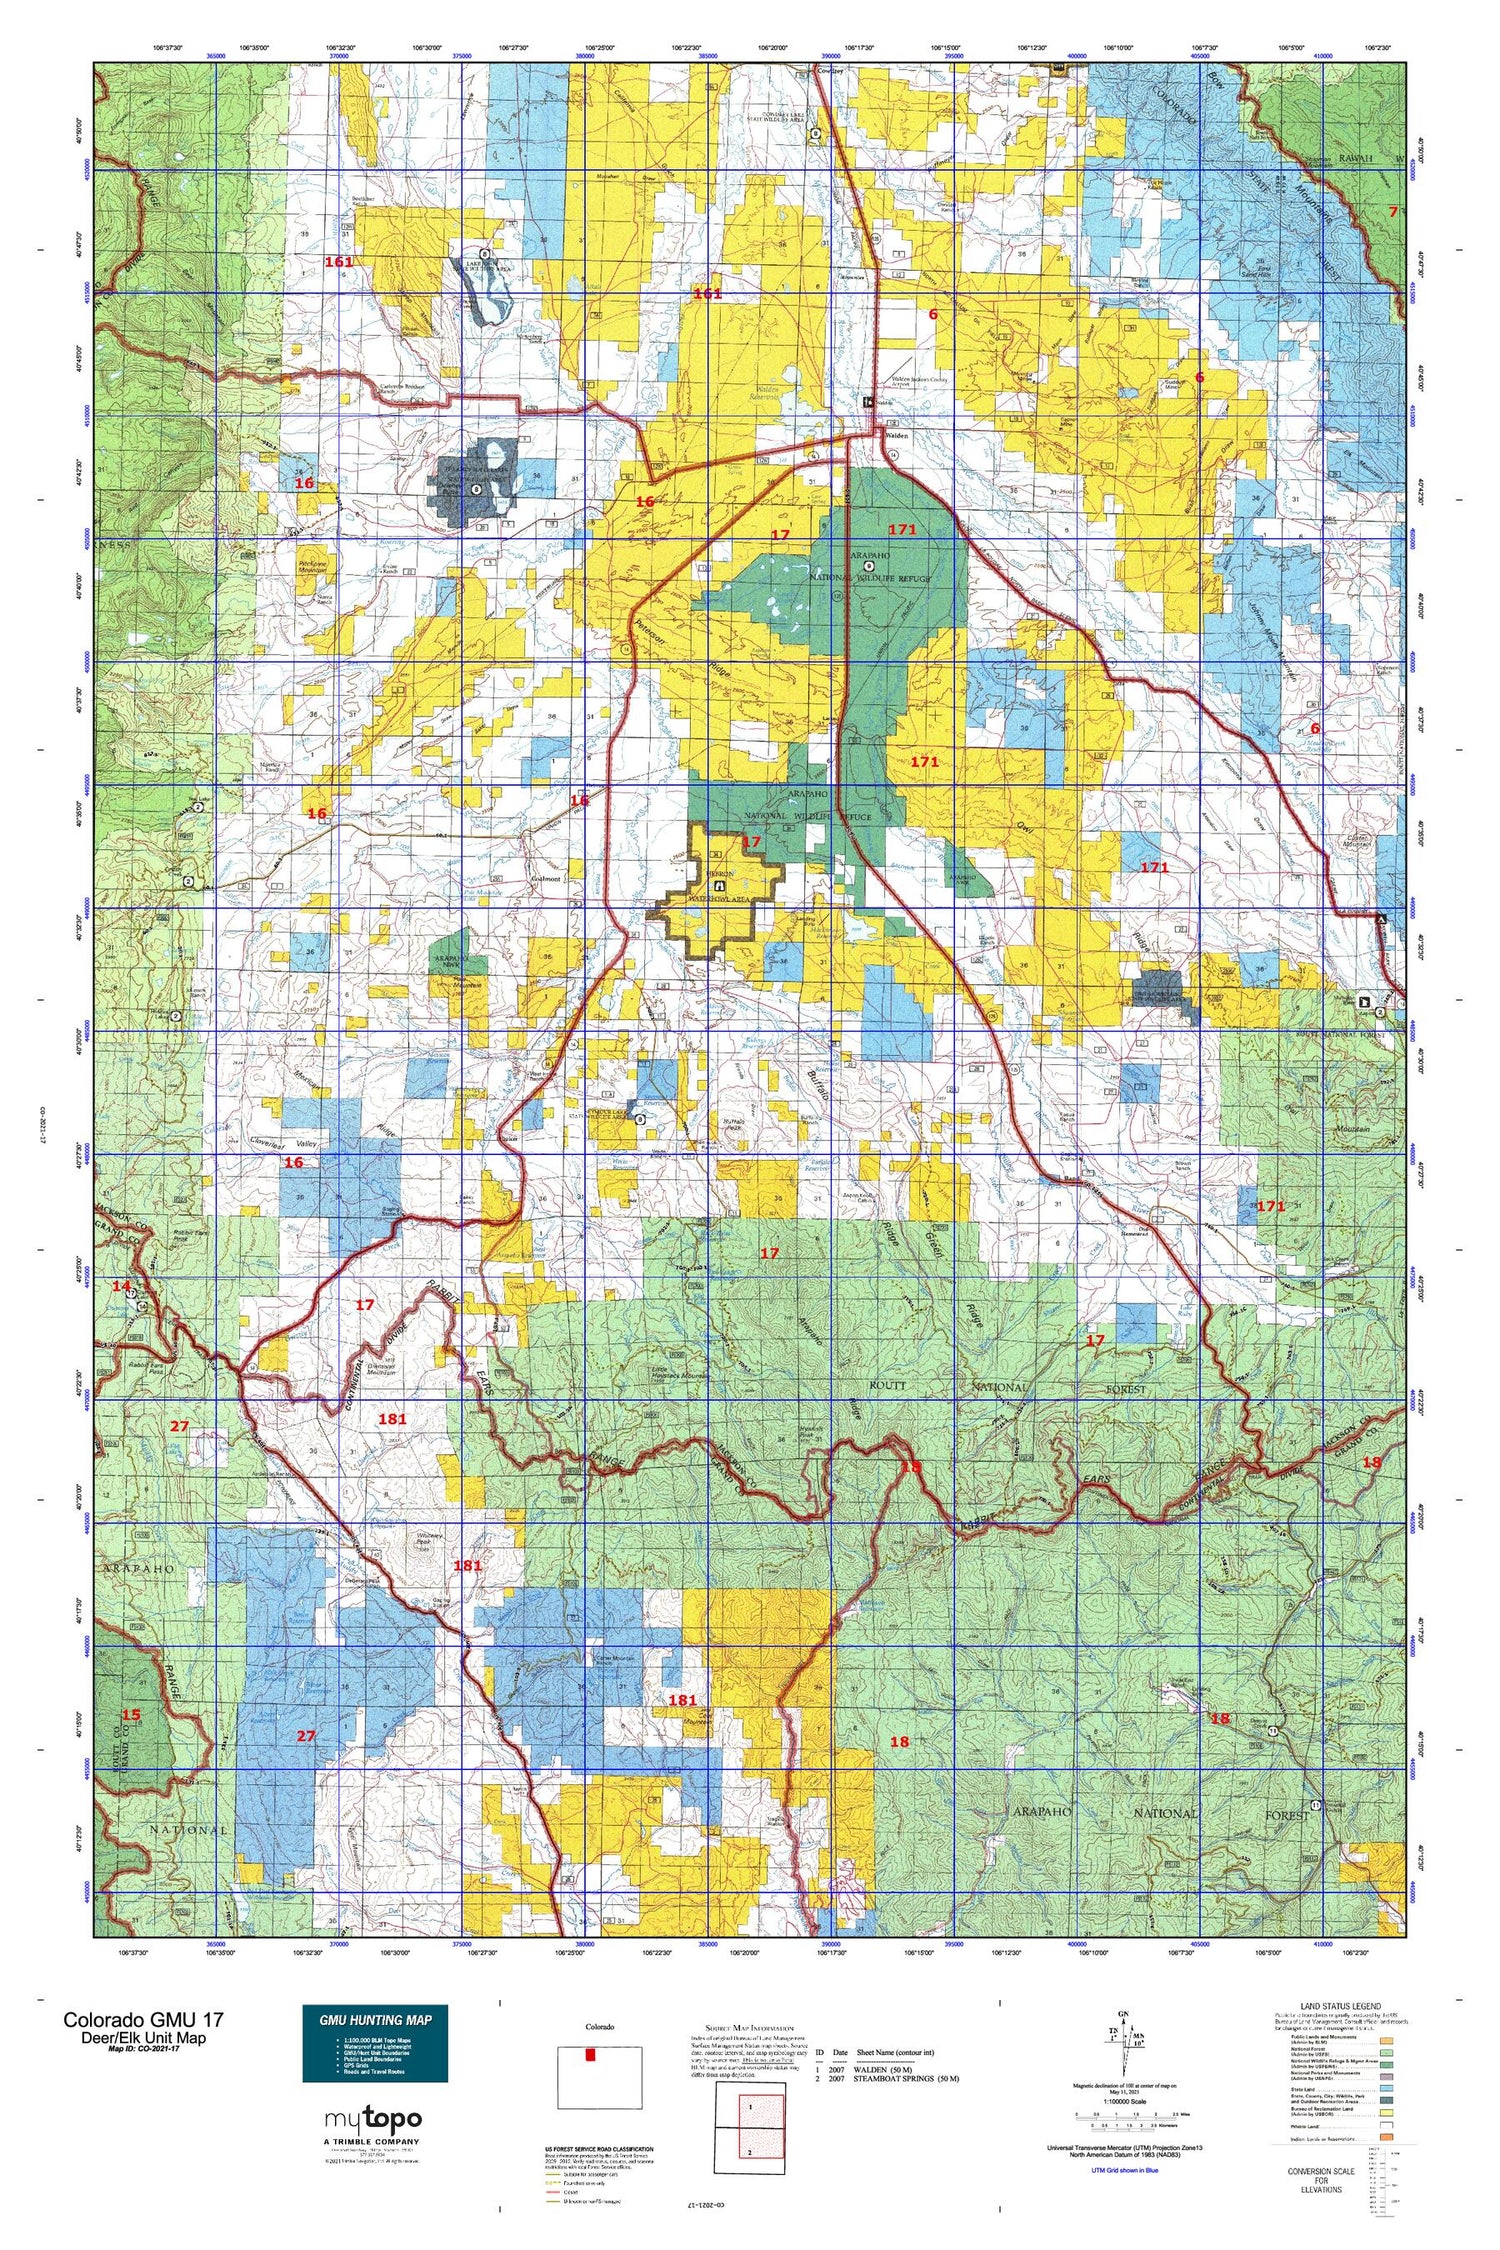 Colorado GMU 17 Map Image